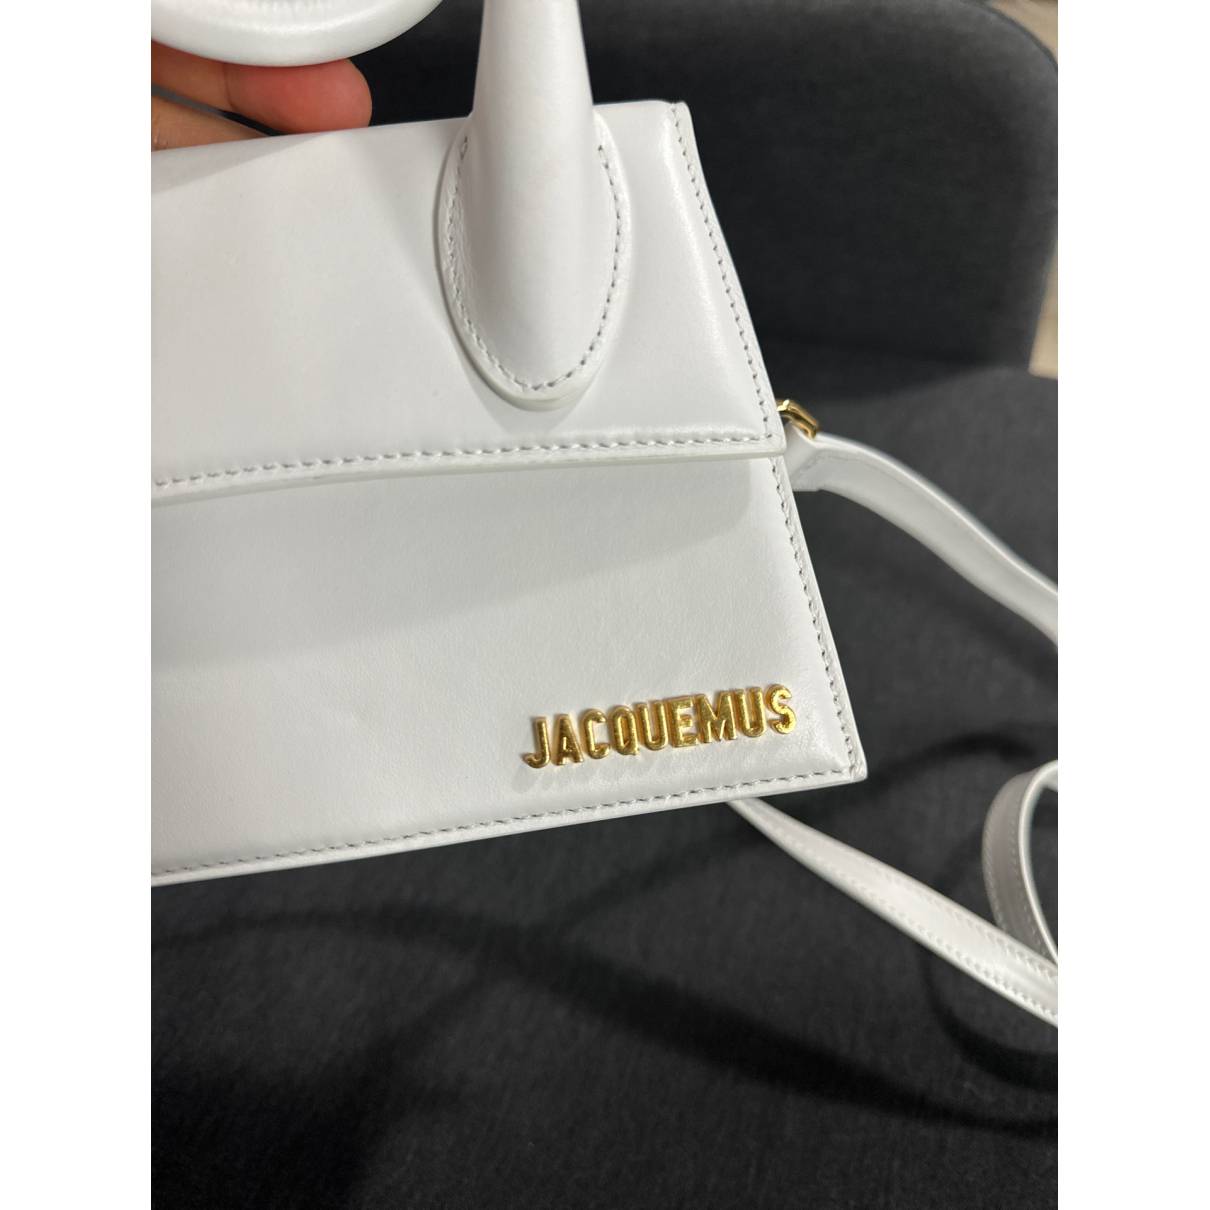 Jacquemus Le Chiquito Noeud Leather Handbag